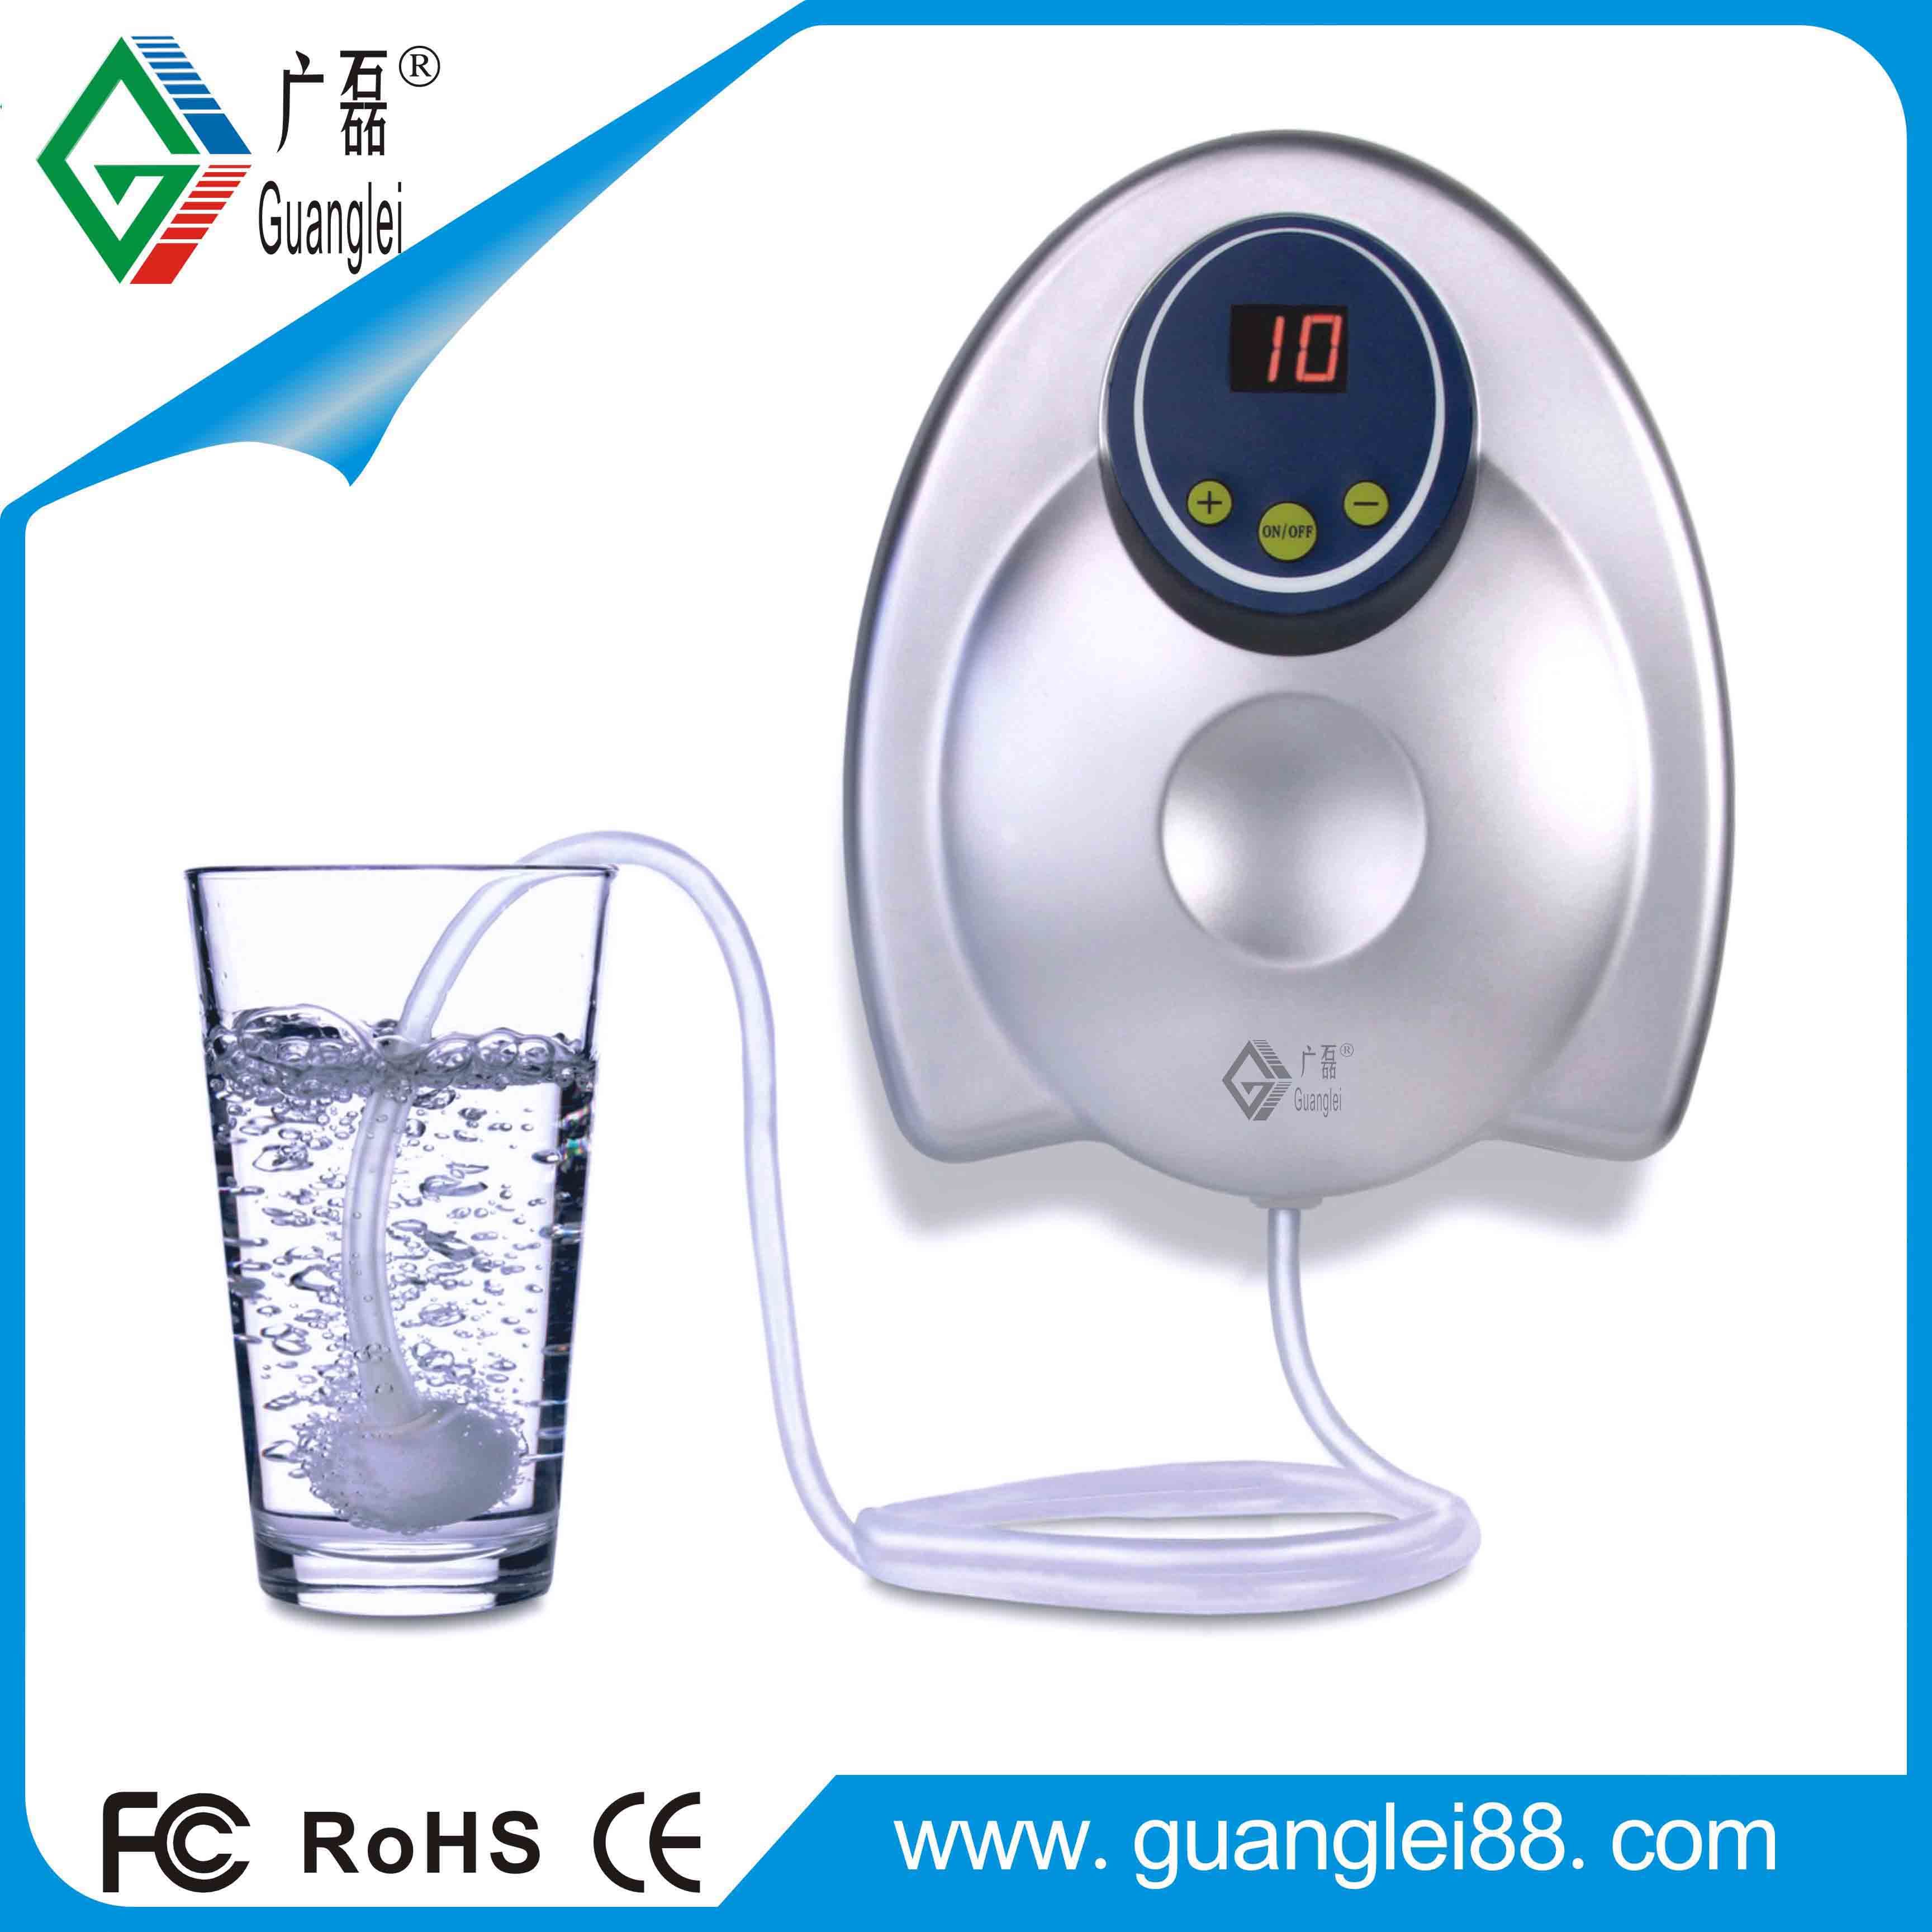 Multifunction Ozone Water Purifier (GL-3188)